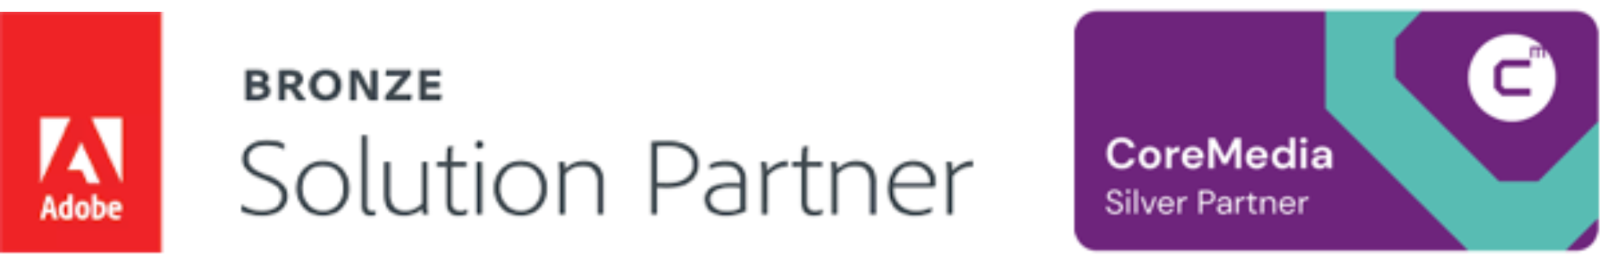 Adobe Solution Partner und CoreMedia Silver Partner